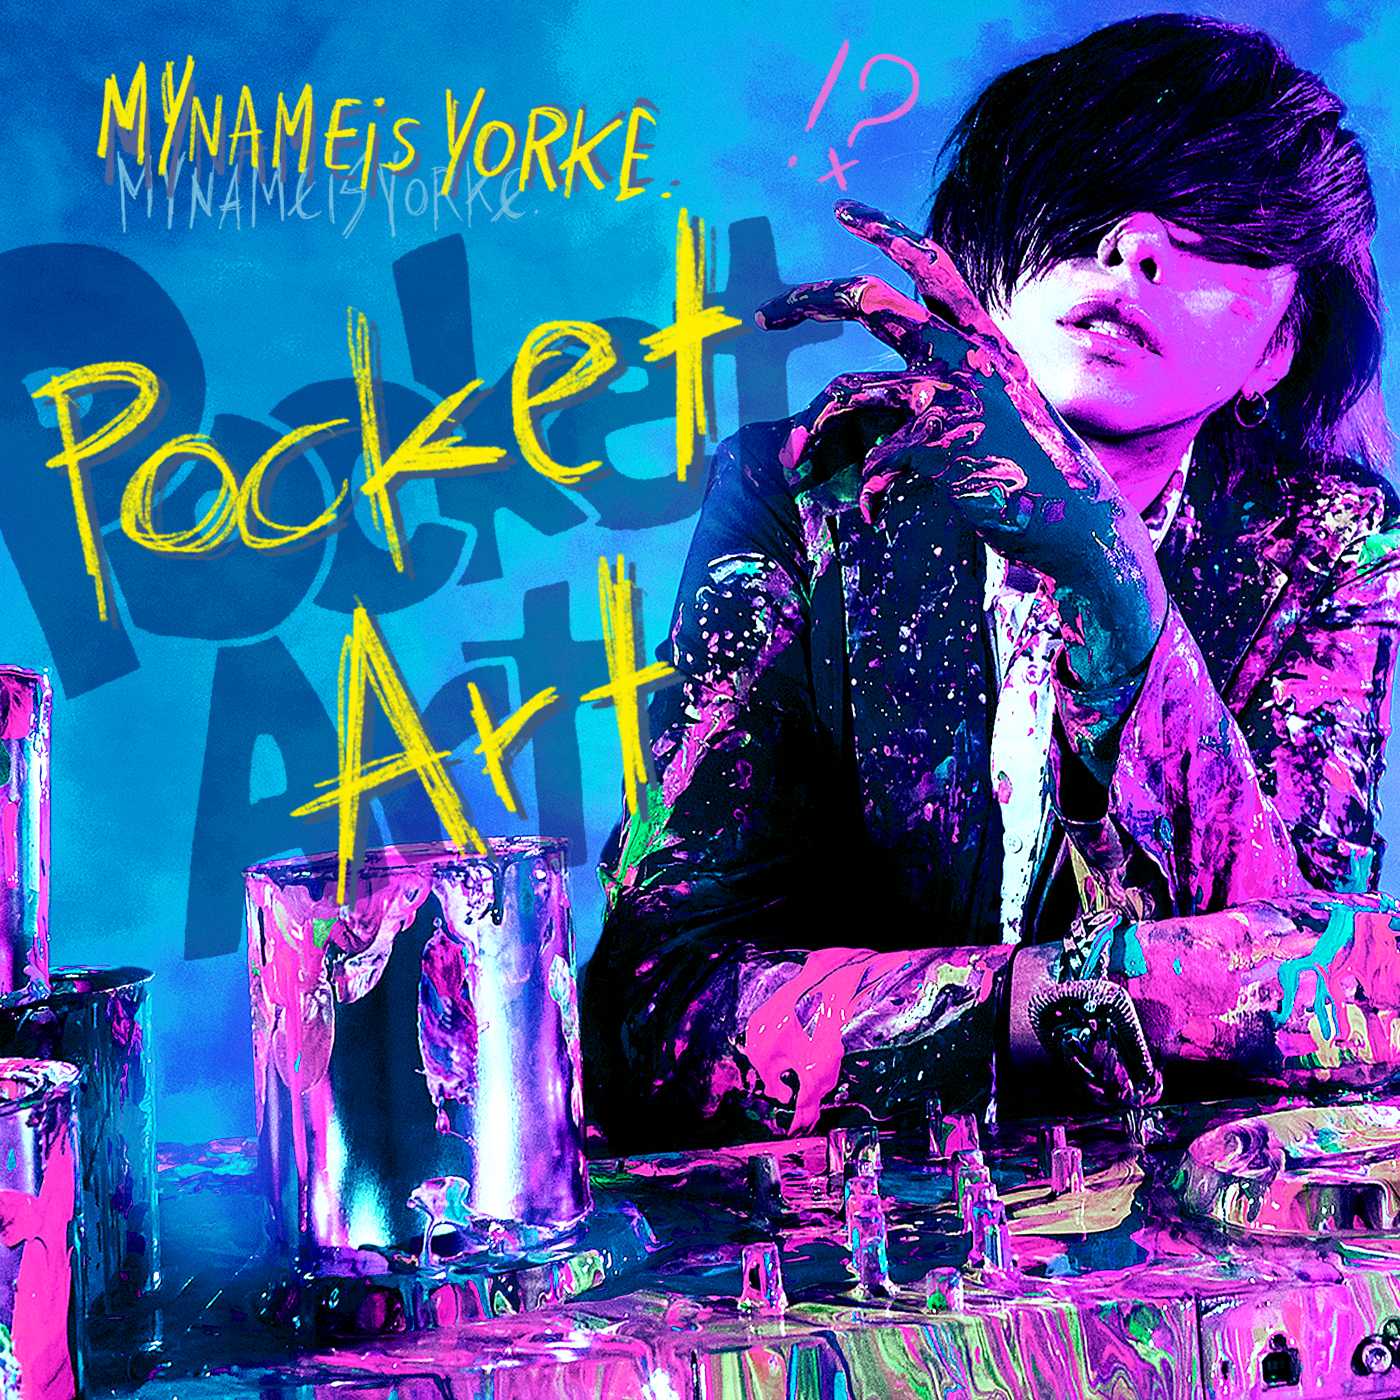 #59 YORKE. Pocket Art【雛祭りを前に、雛人形をアートとして見てみたら・・・】